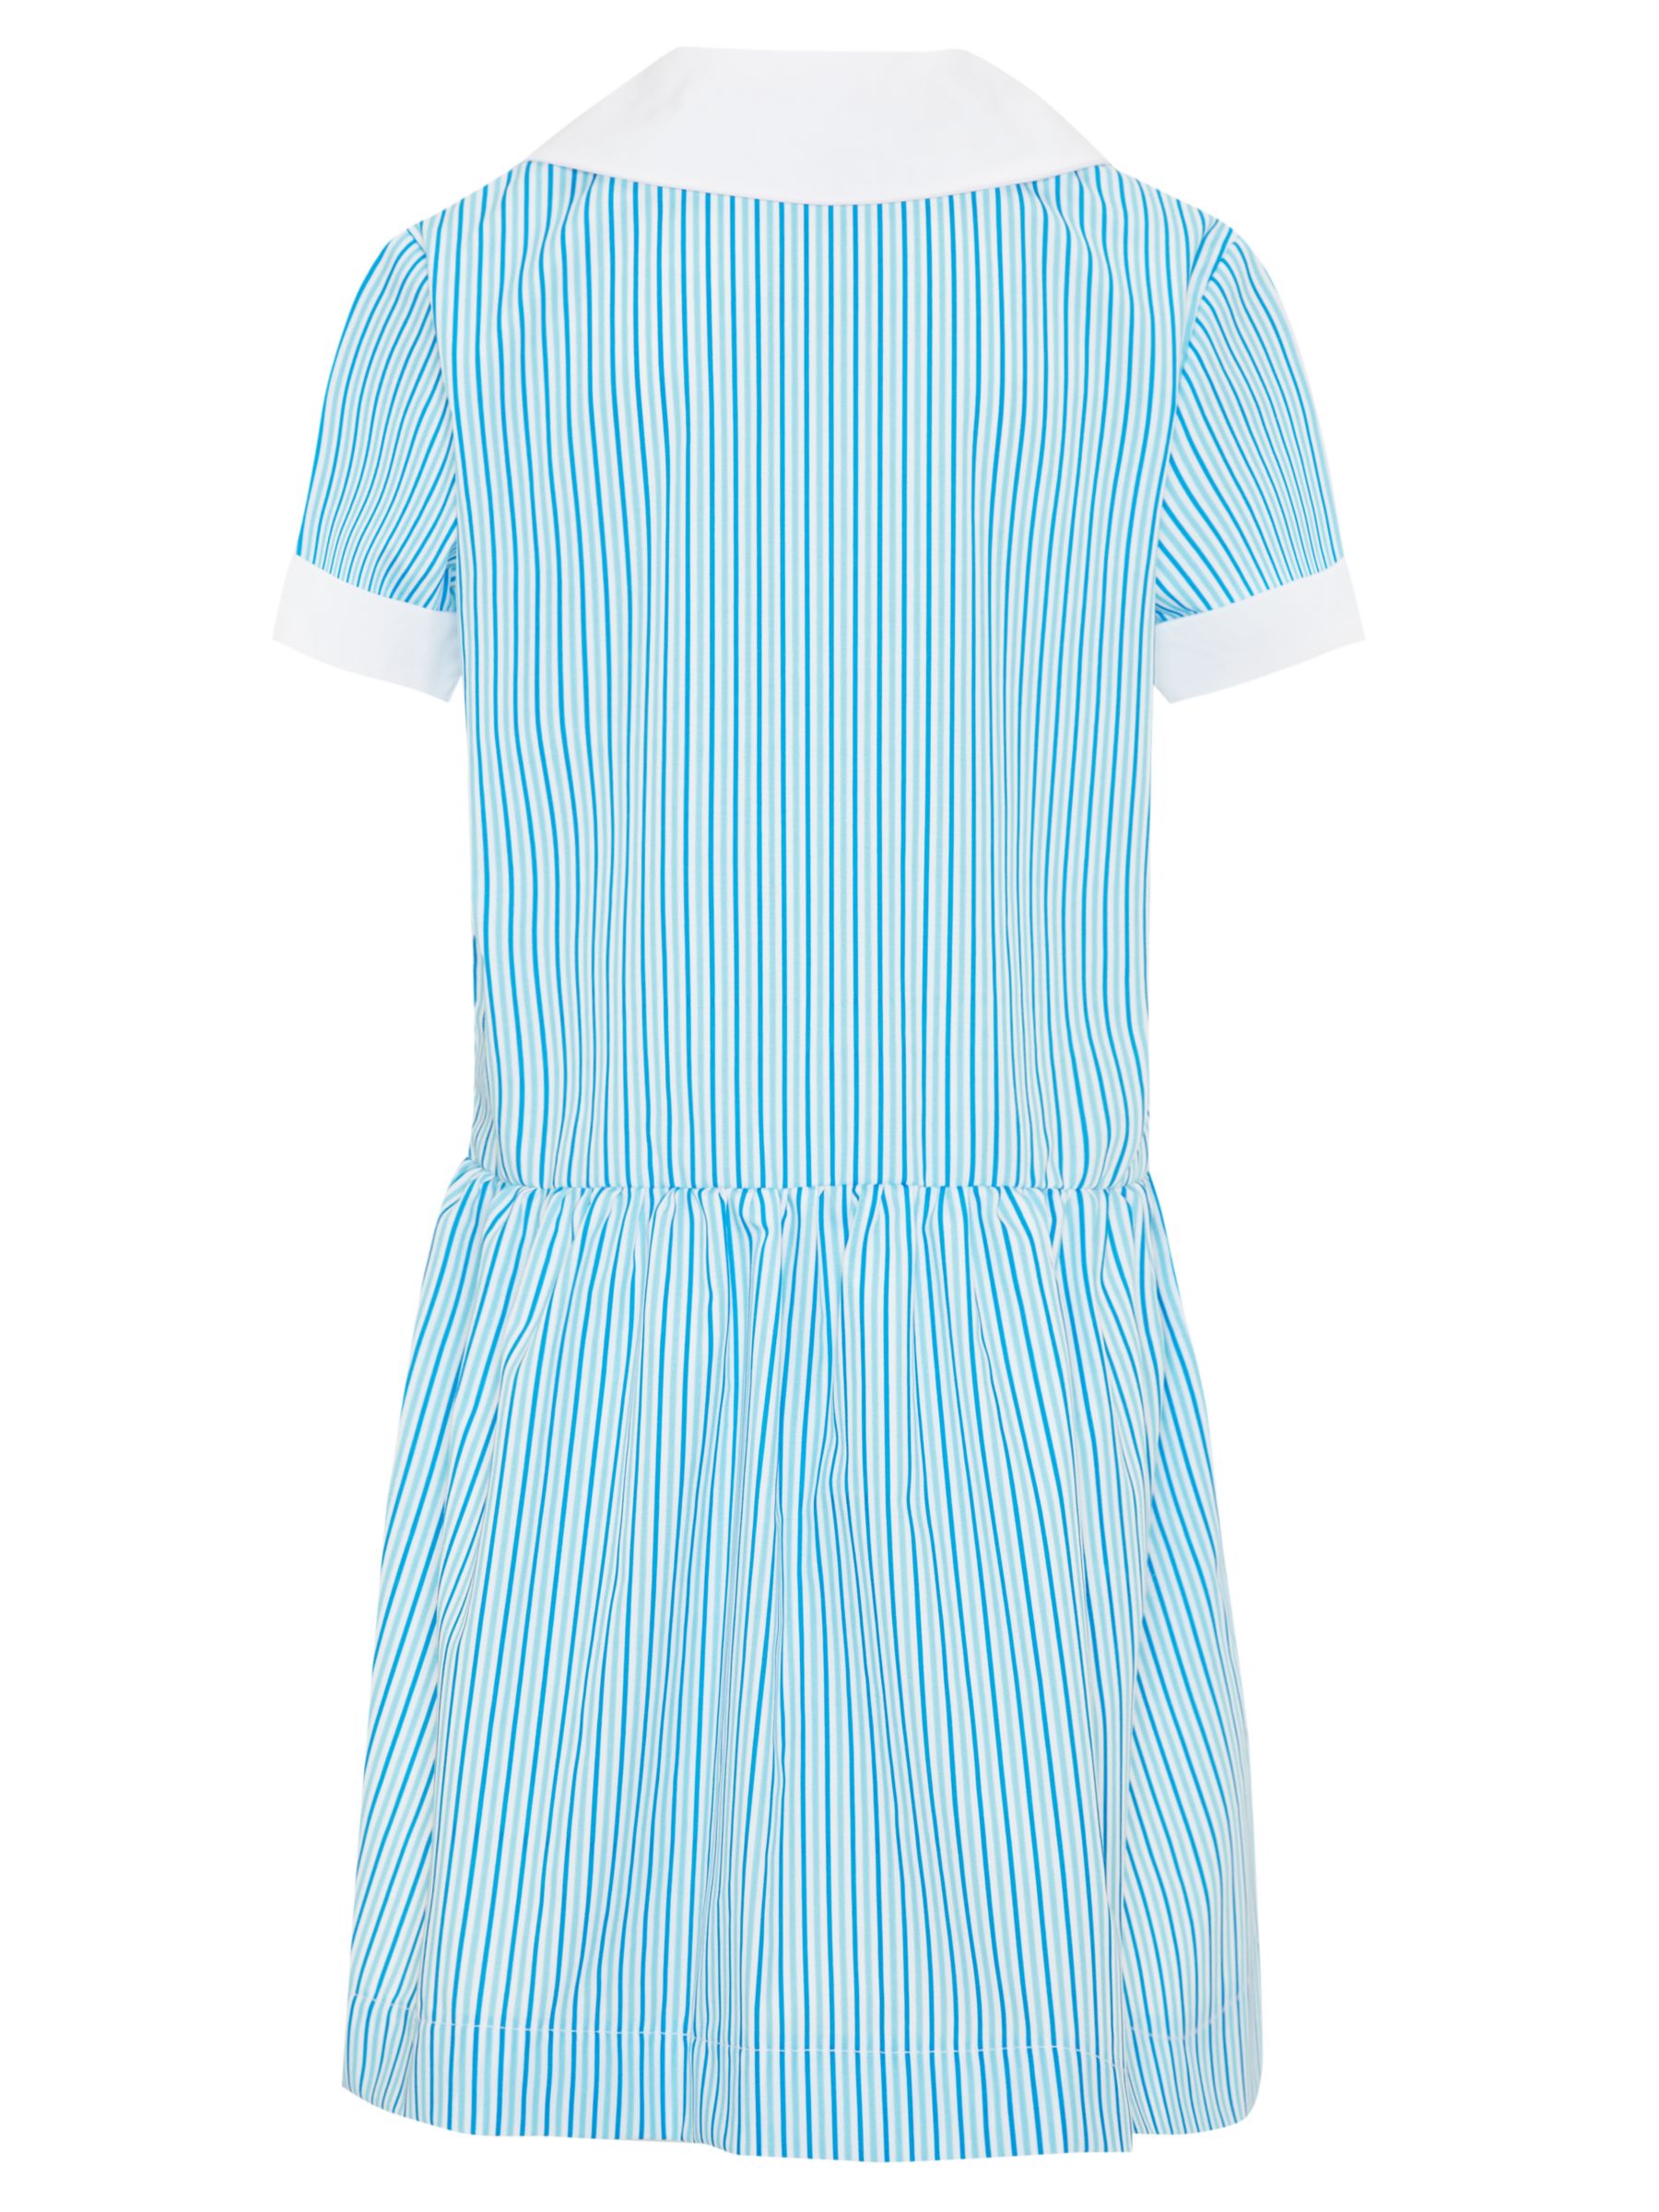 Sherrardswood School Girls' Striped Summer Dress, Blue/White at John Lewis